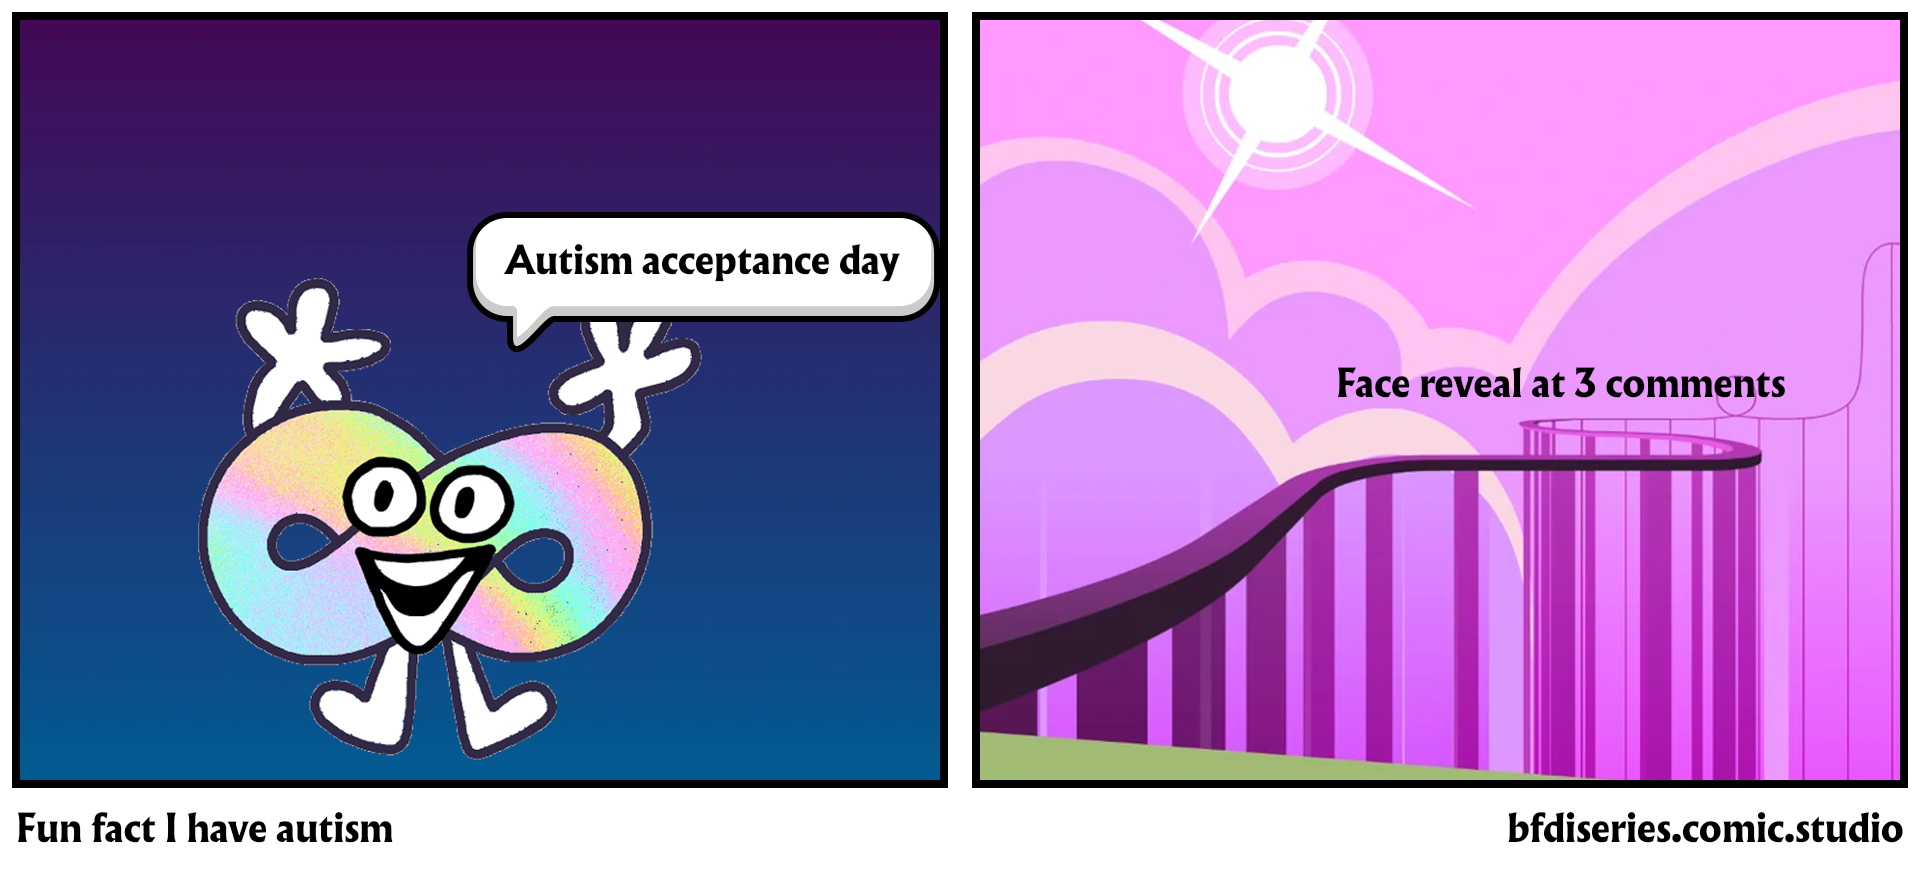 Fun fact I have autism